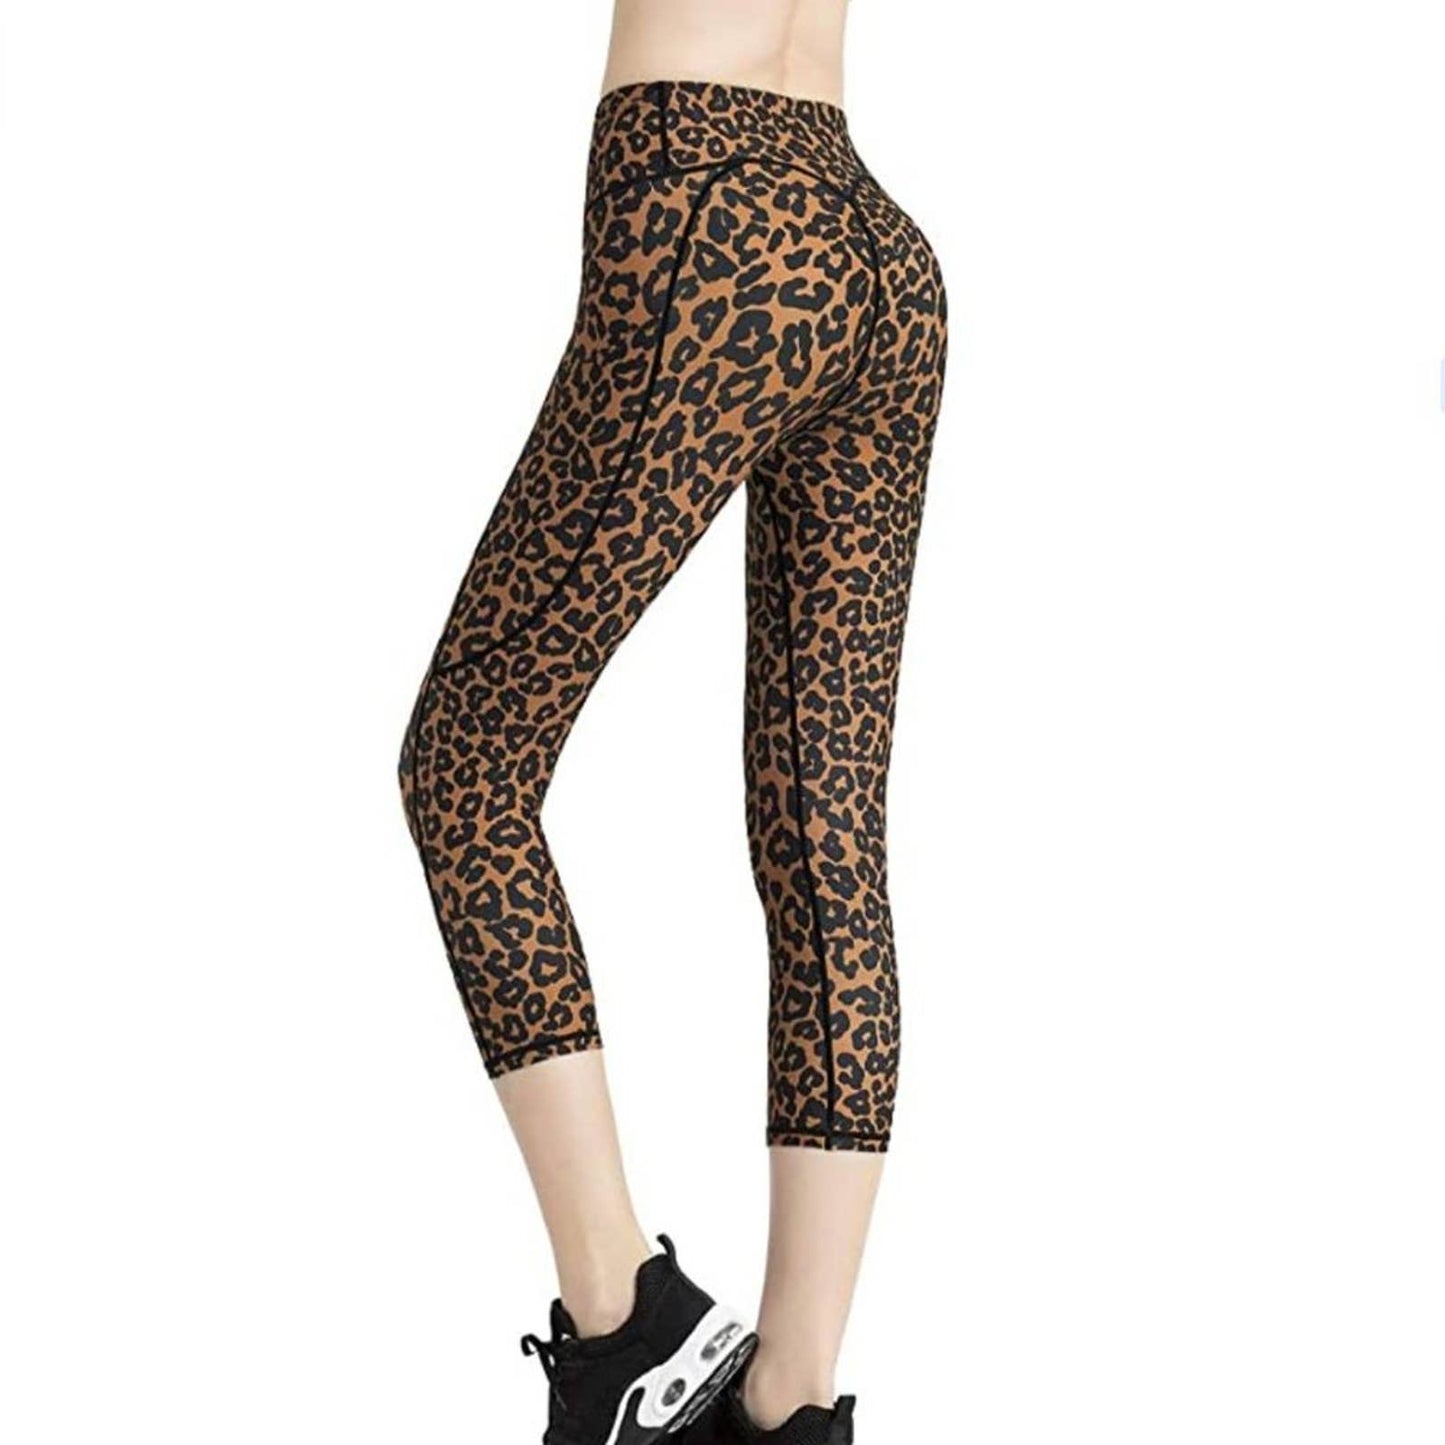 FITTIN Women's Cheetah Workout Capris with Pocket